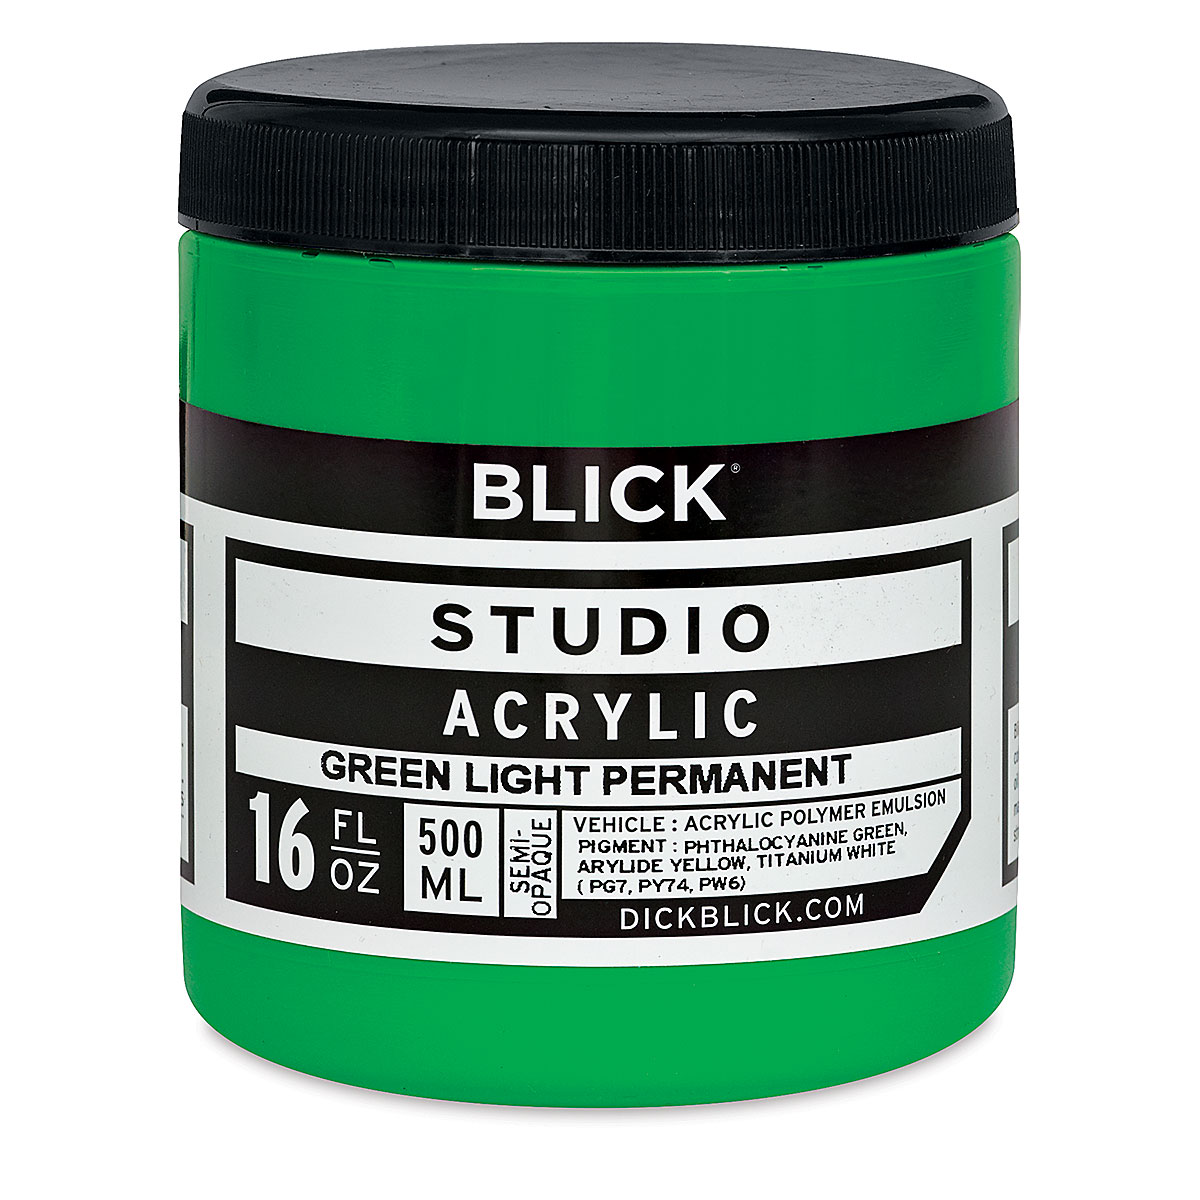 Blick Studio Acrylics - Set of 48 colors, 21 ml tubes